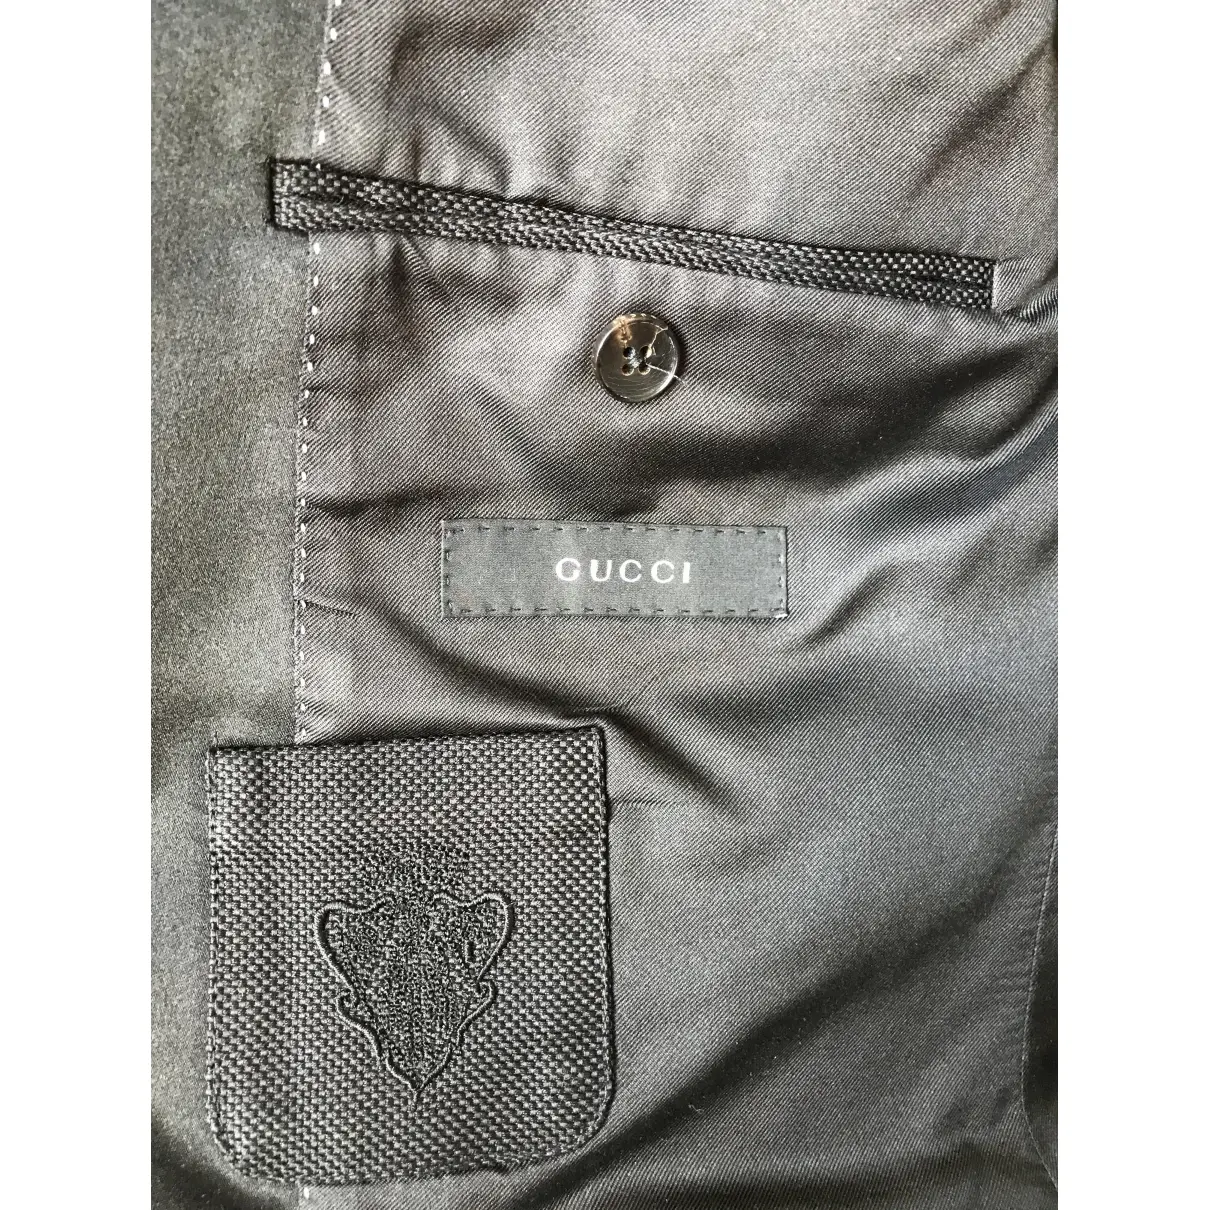 Cotton jacket Gucci